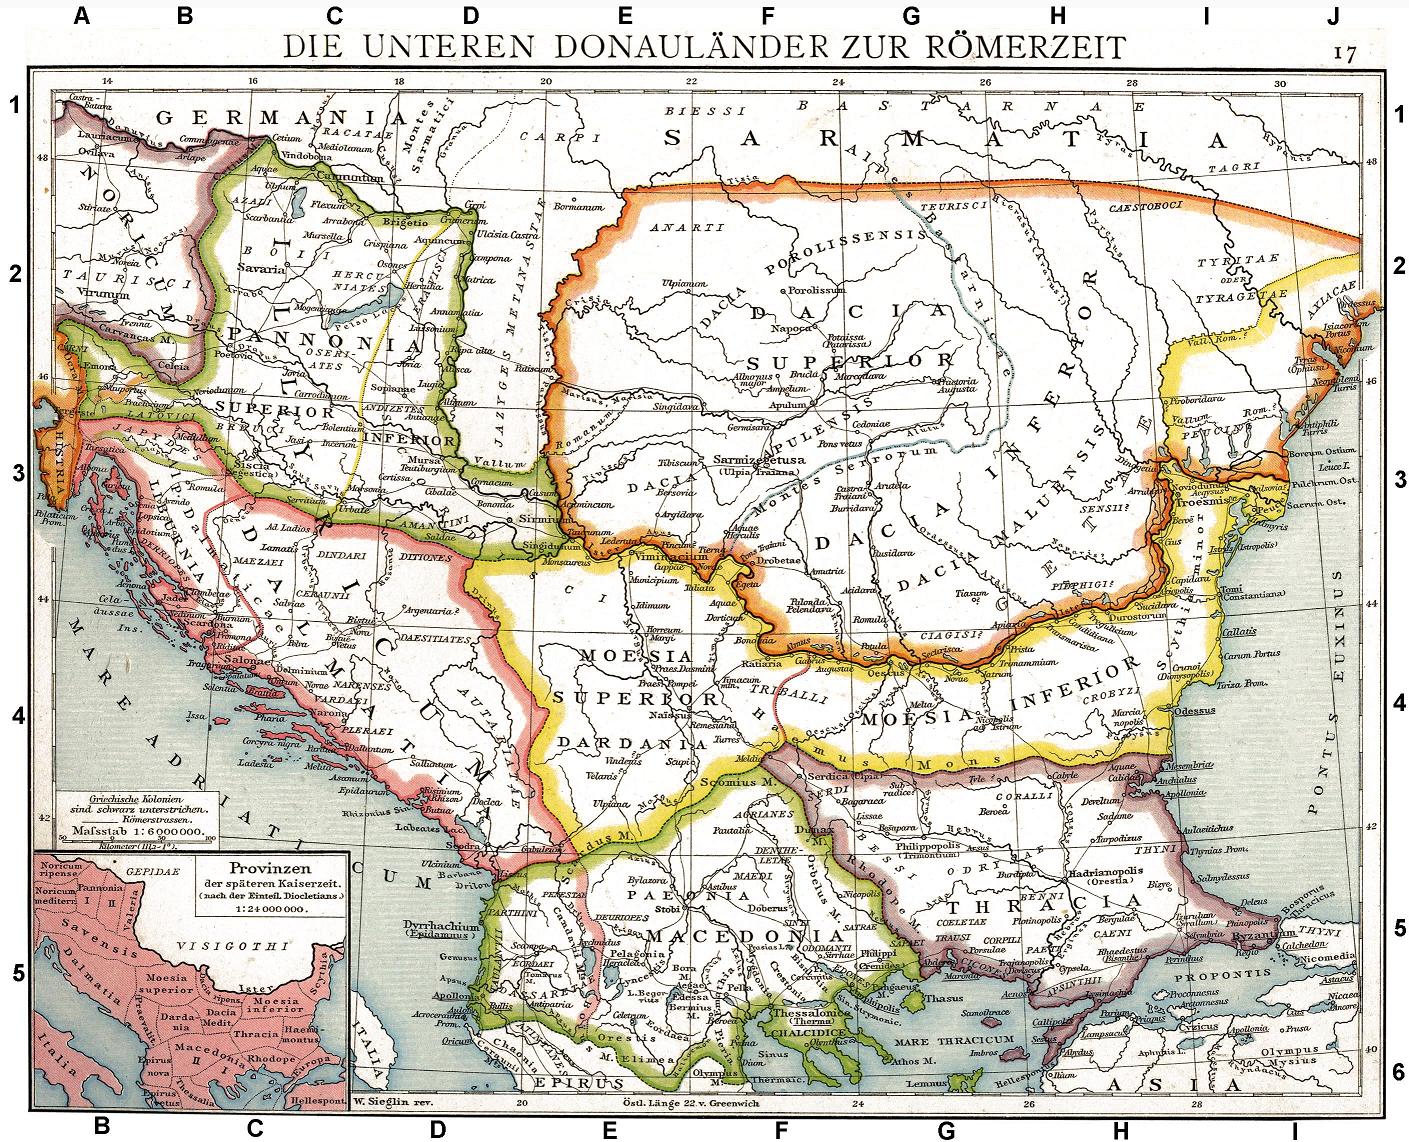 Roman provinces of Illyricum Macedonia Dacia Moesia Pannonia and Thracia